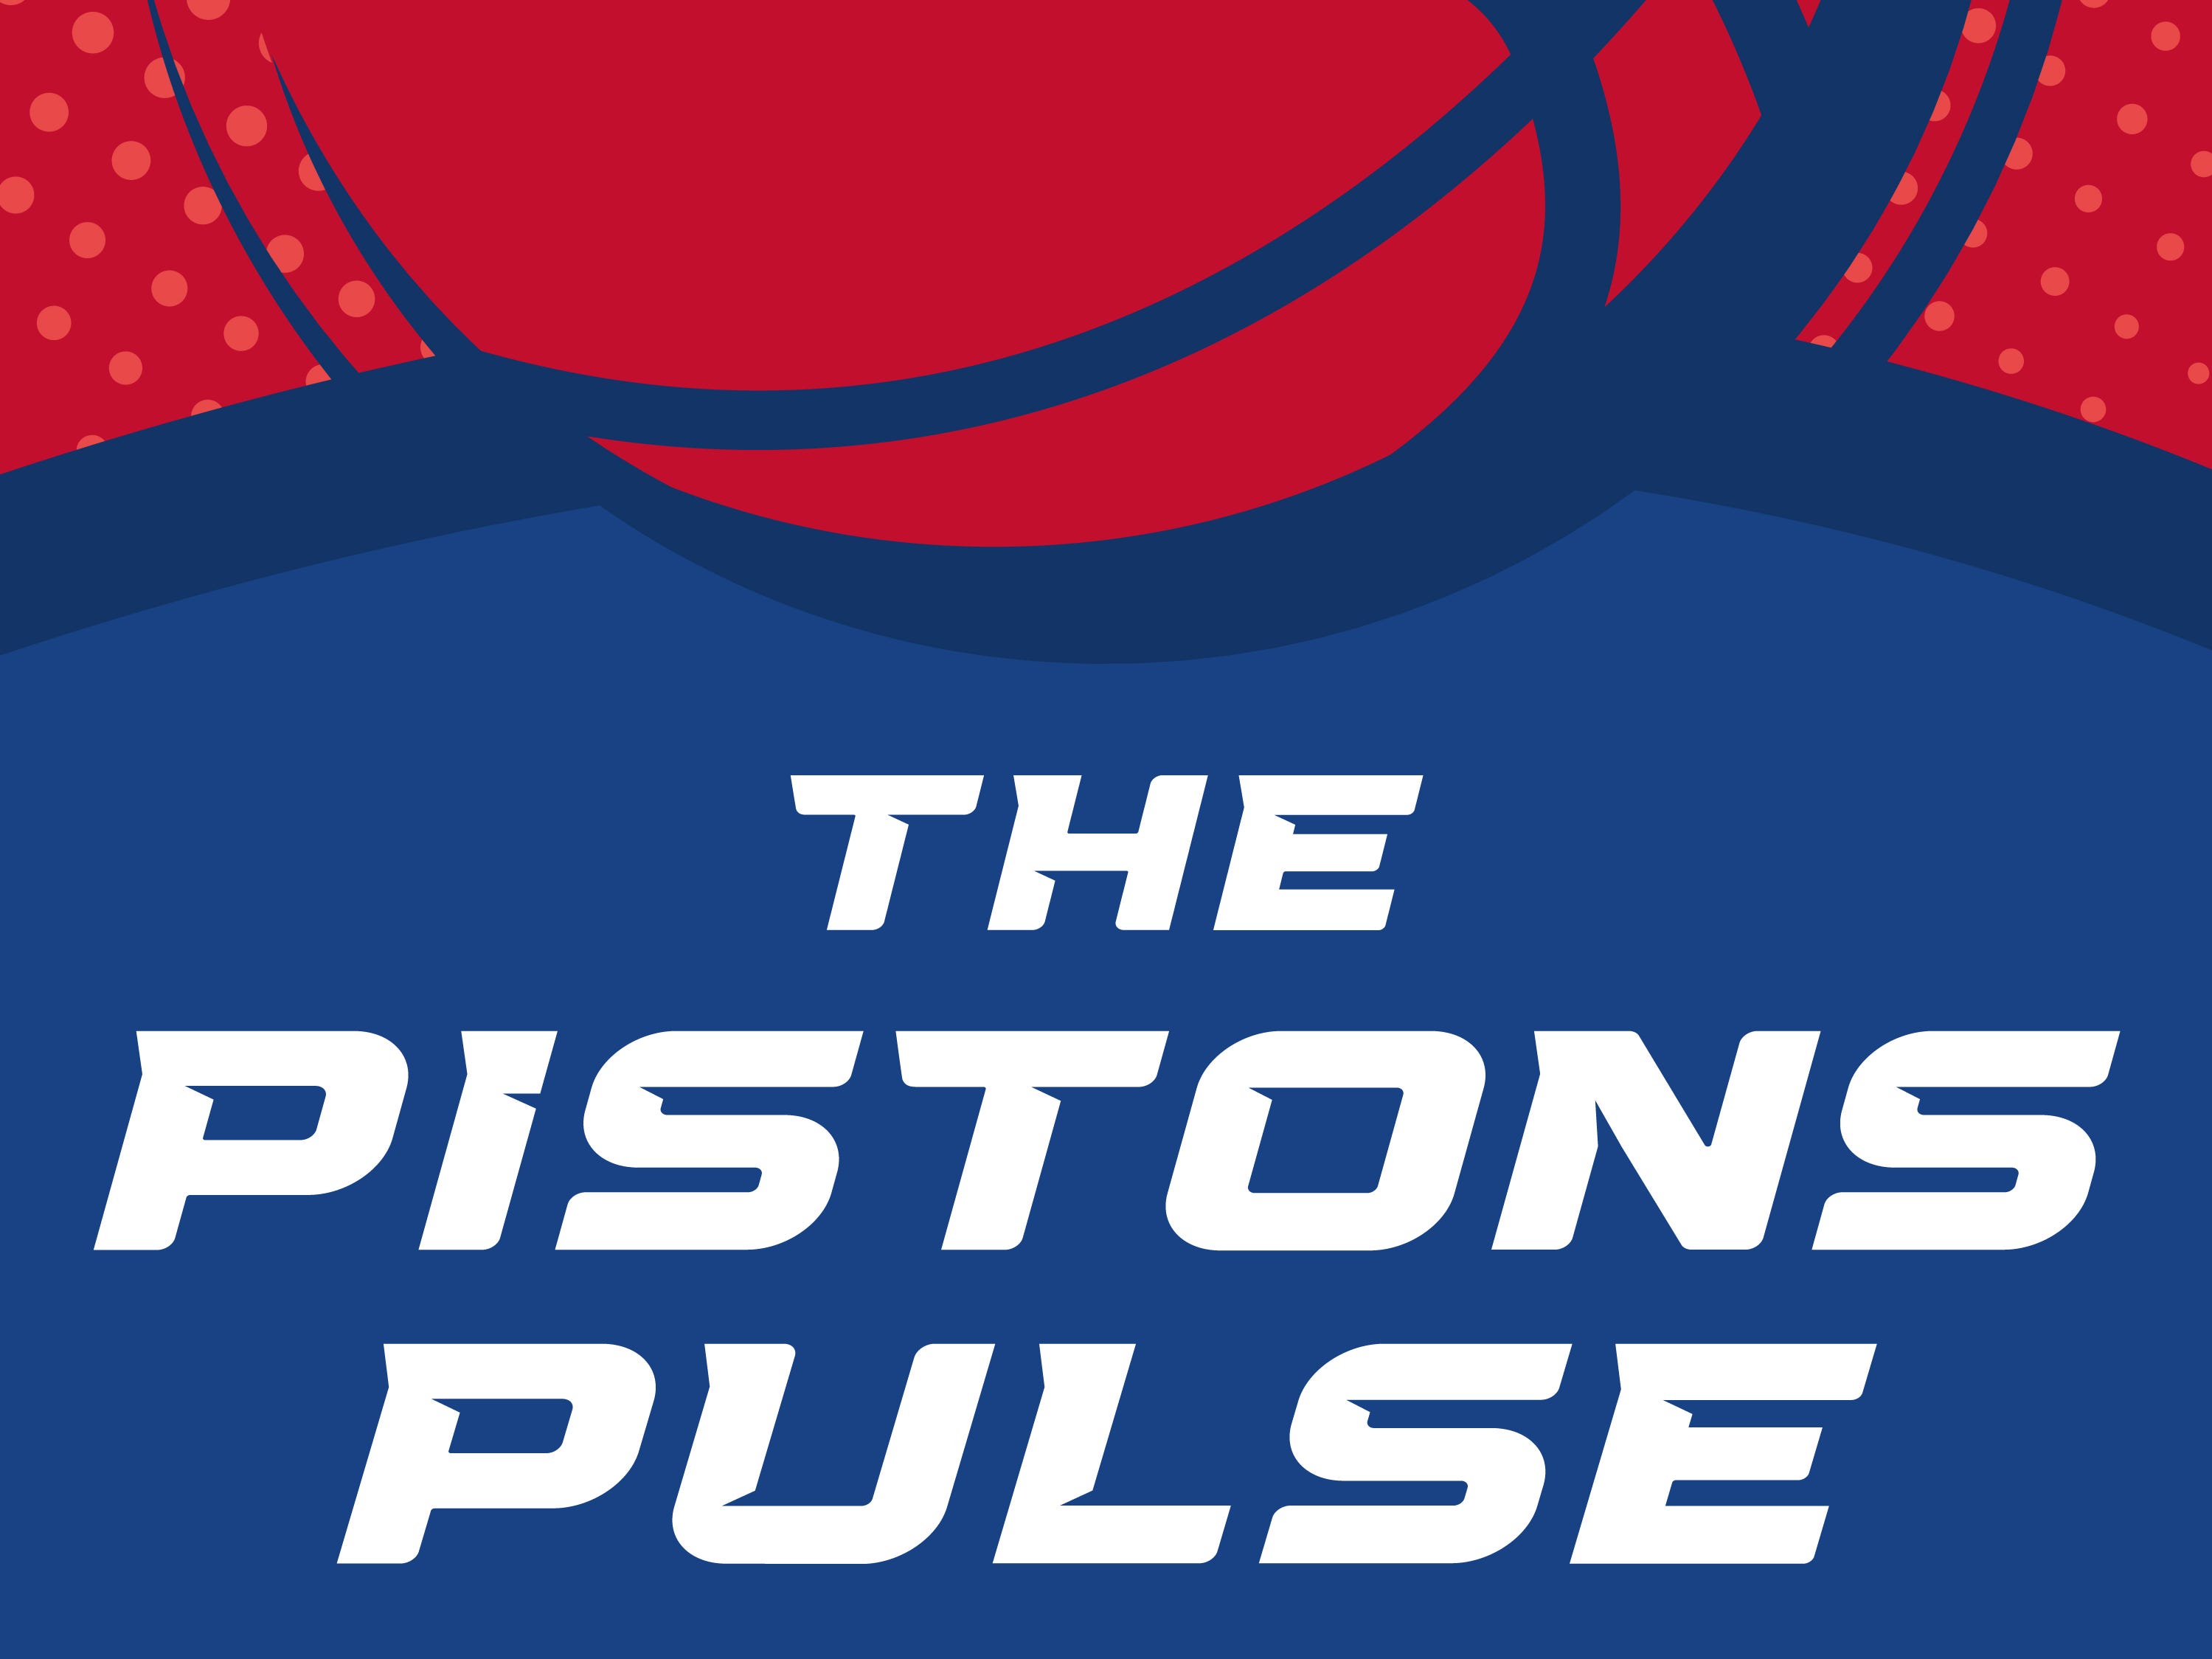 Detroit Pistons Depth Chart Updated: Starting 5 lineup explored